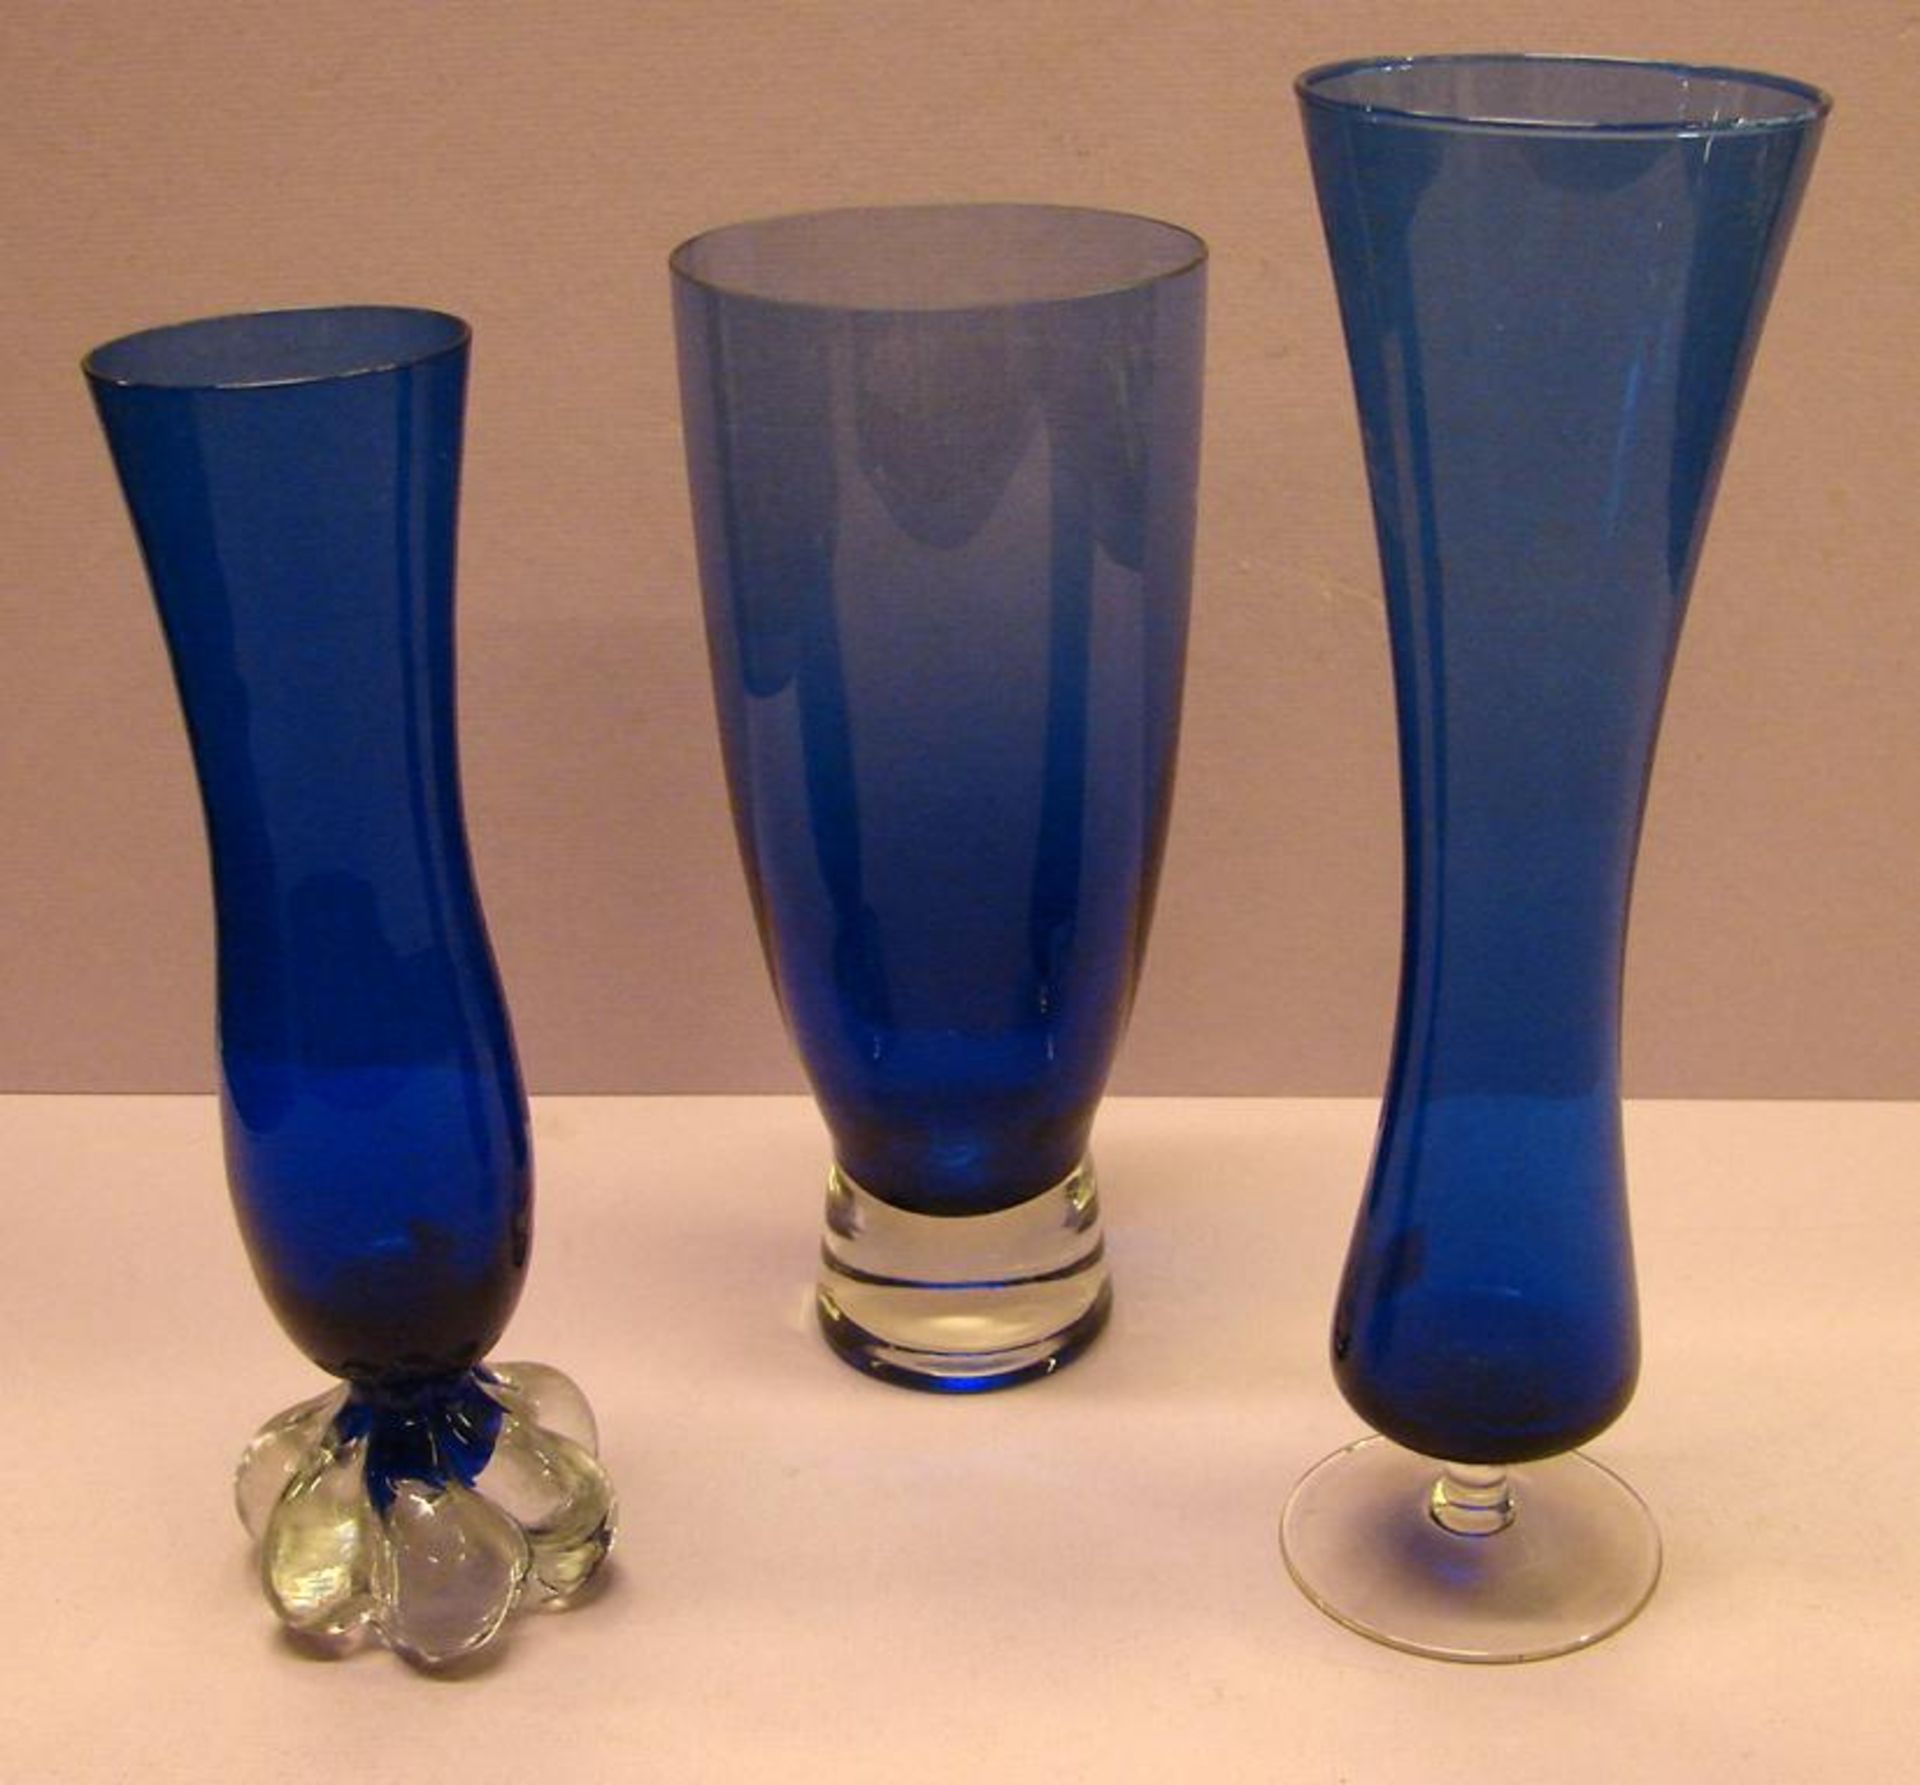 Konvolut Vasen, Glas, blau, H.ca. 22 - 26 cm- - -22.00 % buyer's premium on the hammer price19.